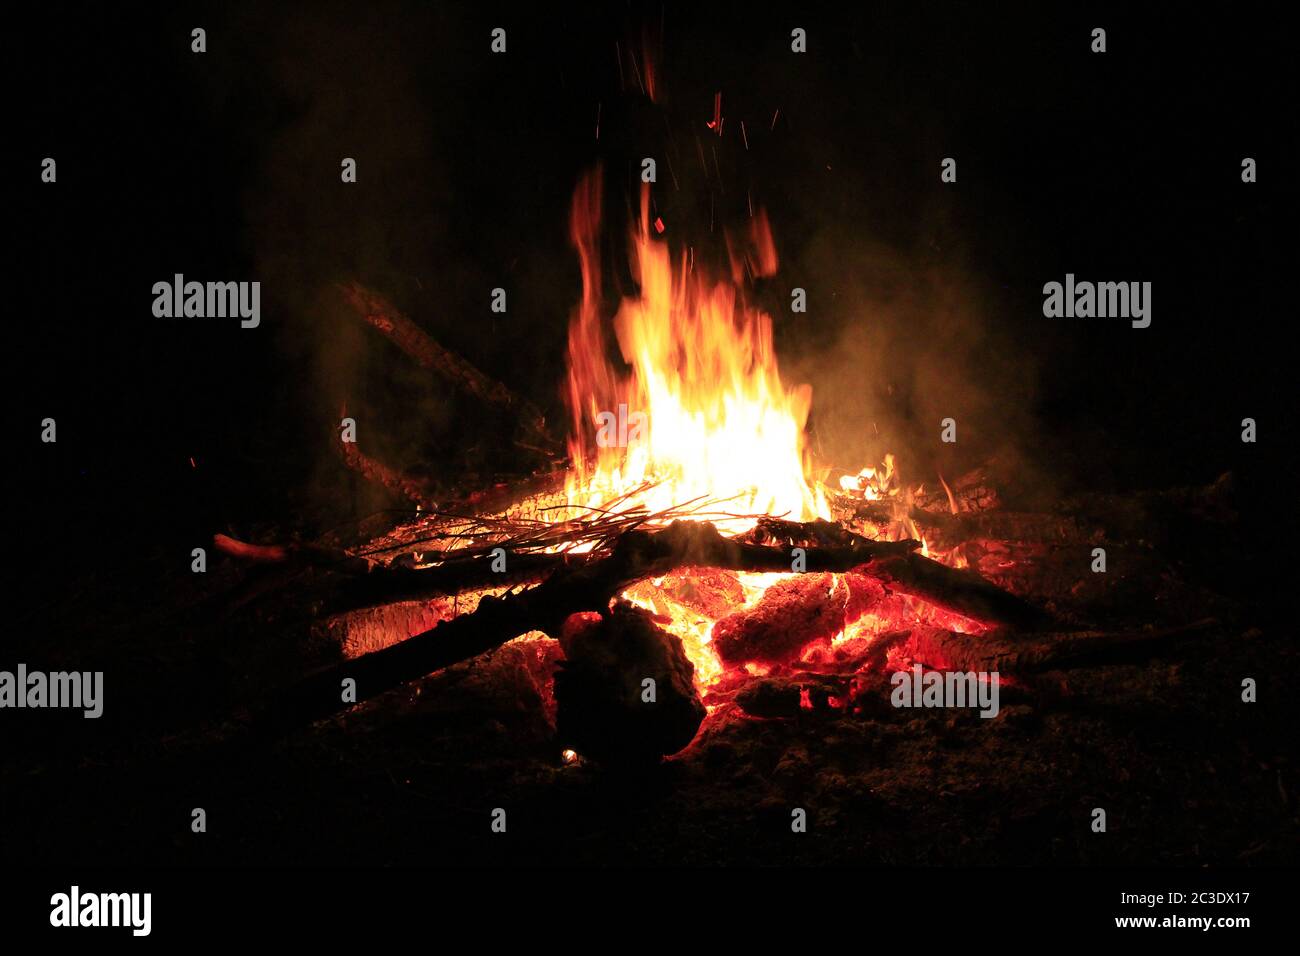 Feuer Holz helllich Brennen im Ofen. Brennholz brennt im ländlichen Ofen.  Brennendes Brennholz im Kamin Clo Stockfotografie - Alamy